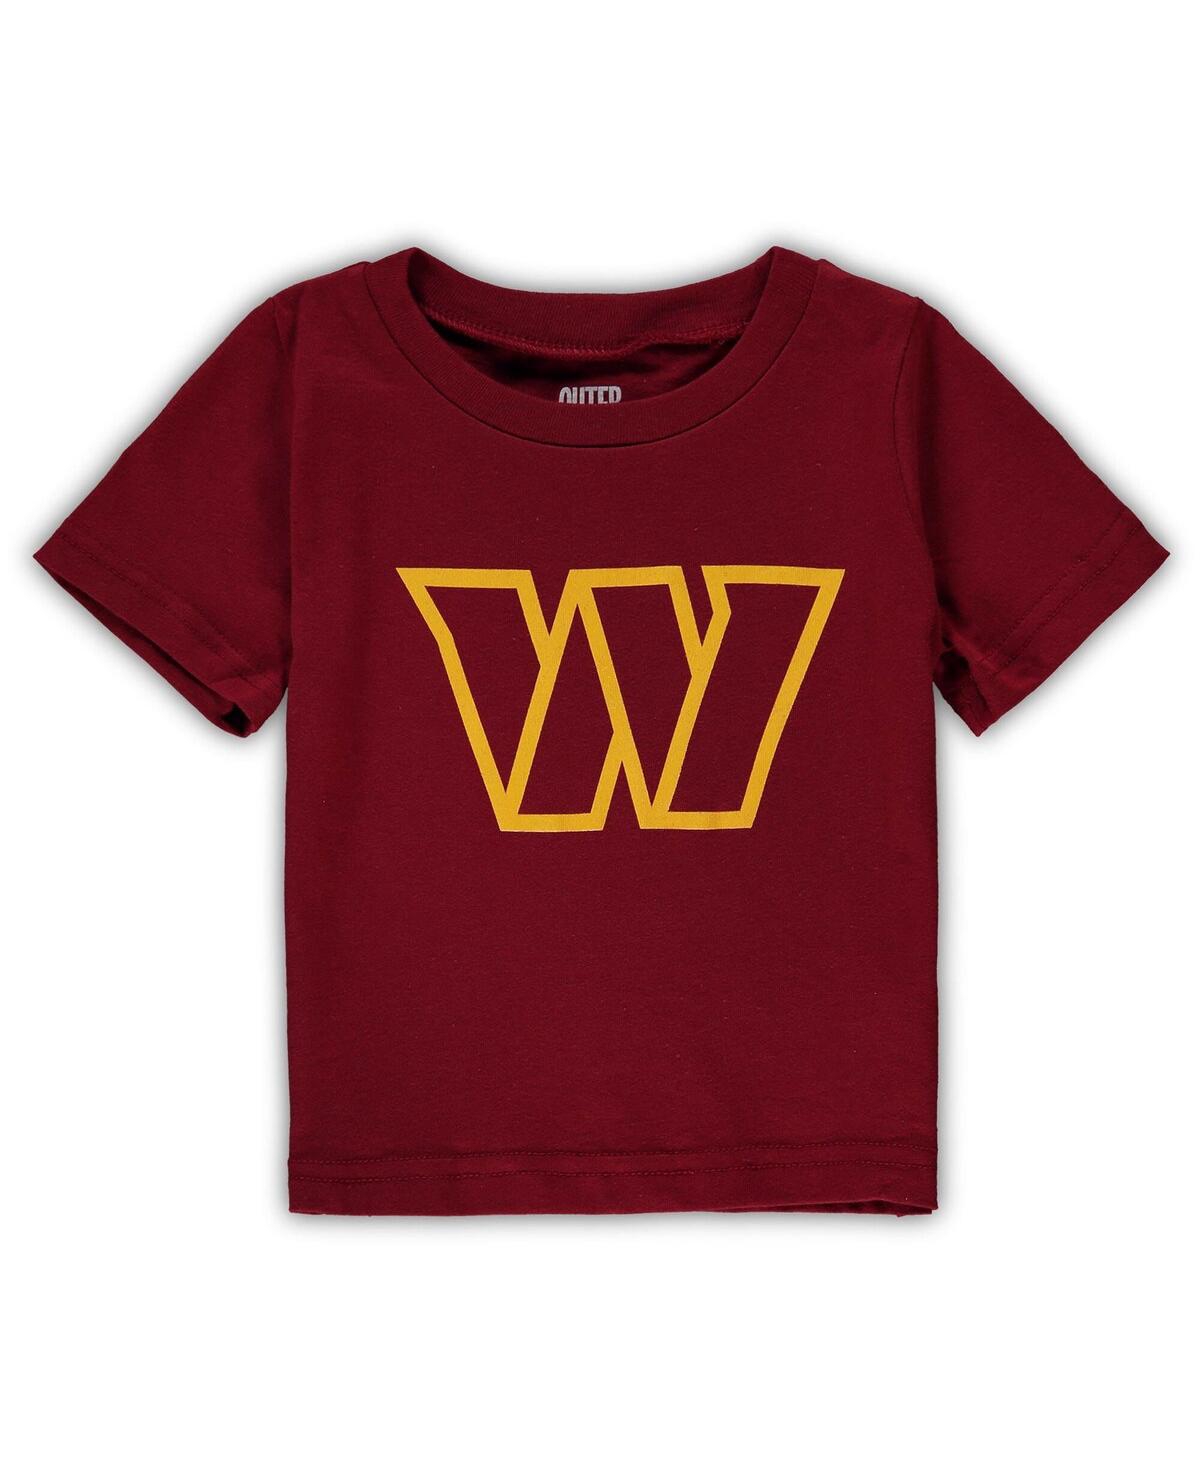 Outerstuff Babies' Infant Boys And Girls Burgundy Washington Commanders Team Logo T-shirt